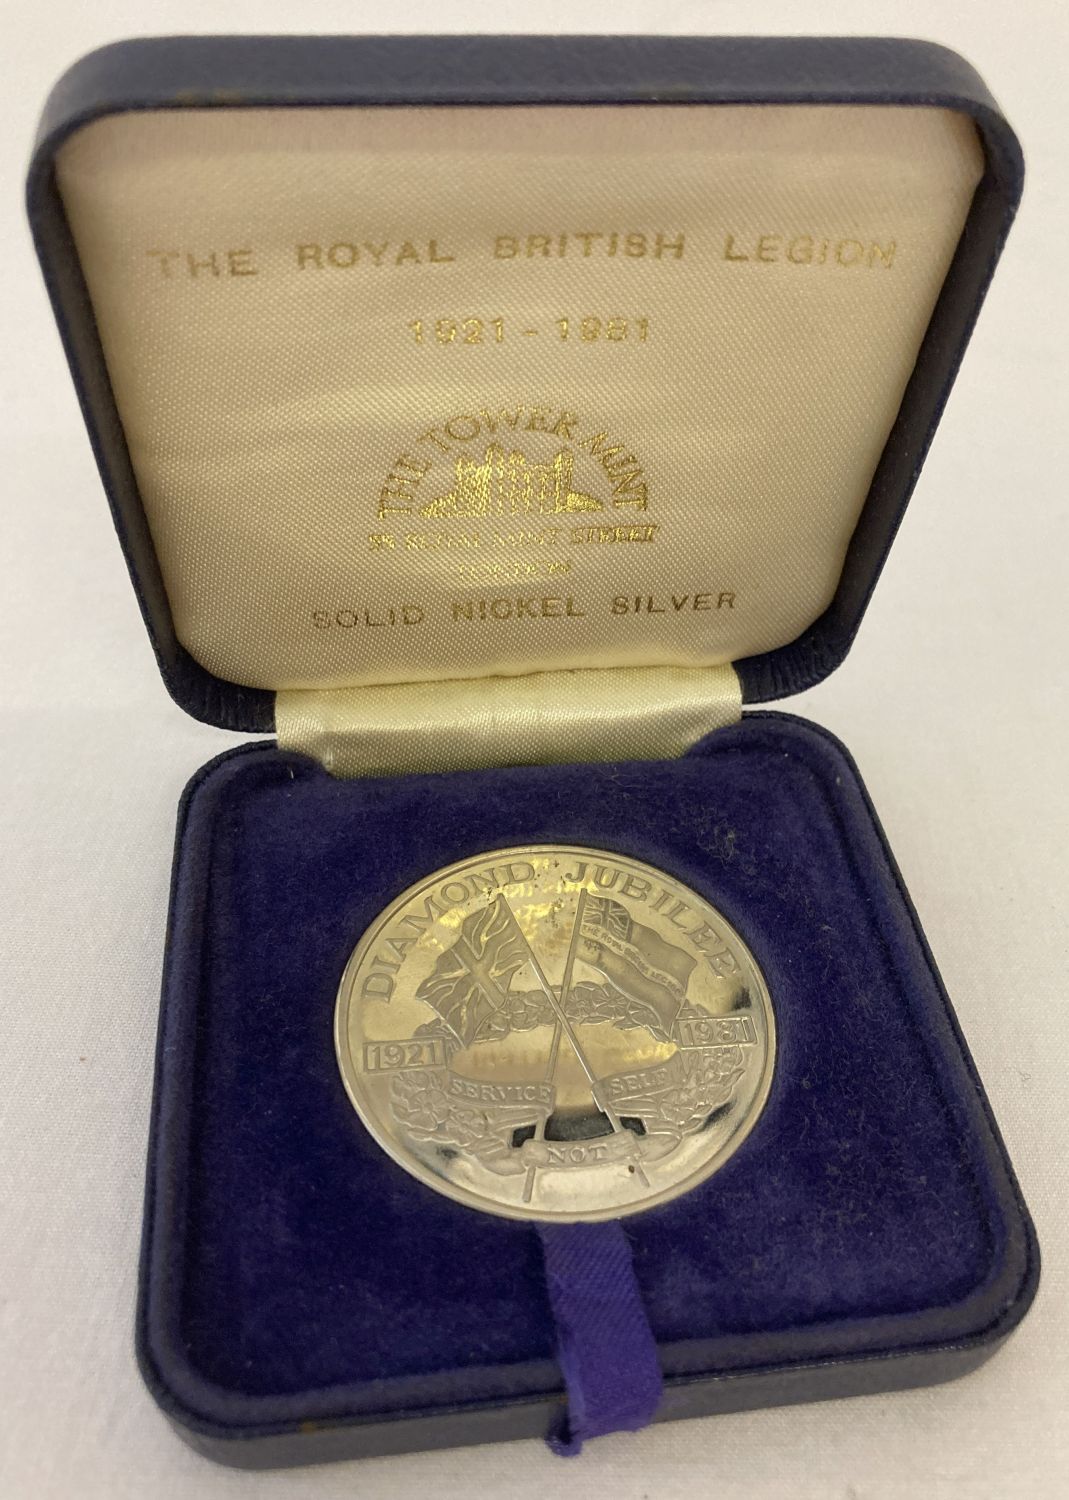 A boxed Royal British Legion Diamond Jubilee 1921-1961 commemorative medal.